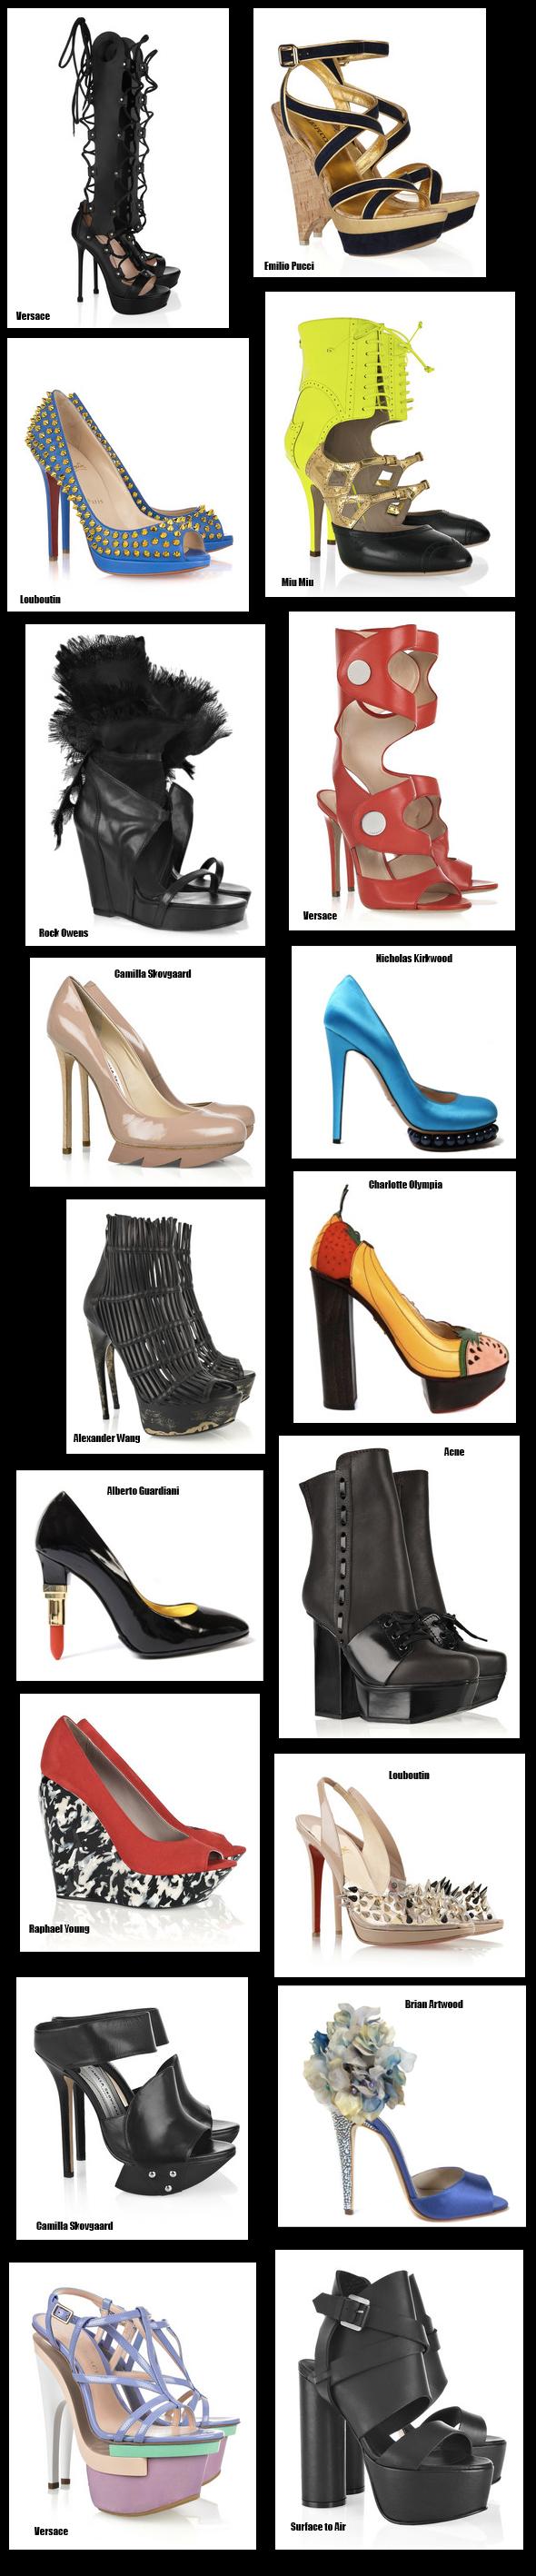 Atypical heels